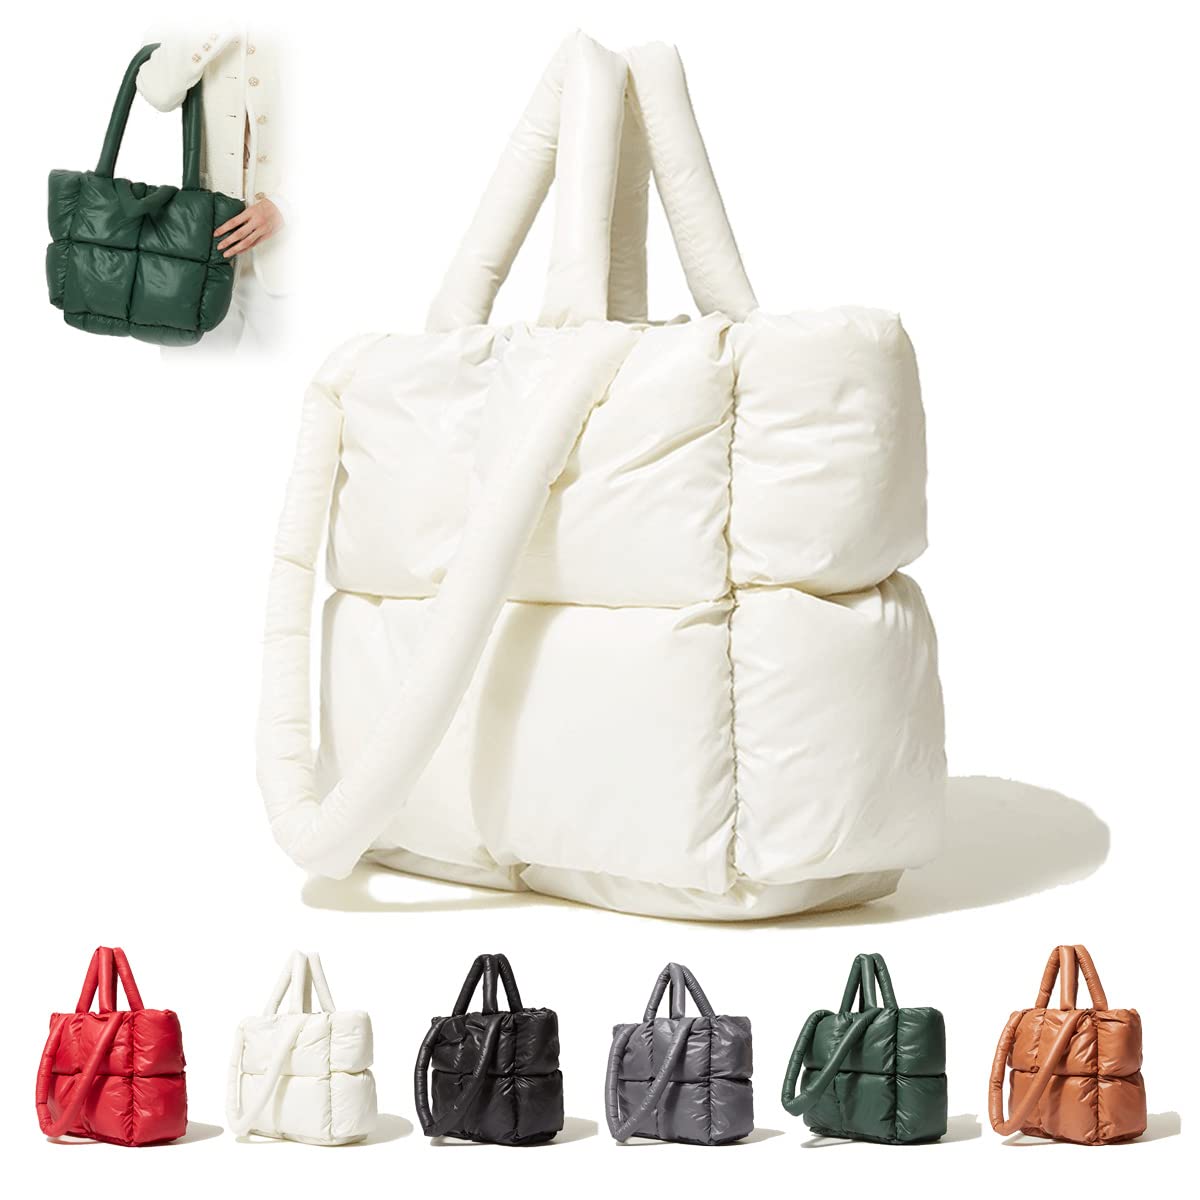 customized handbags